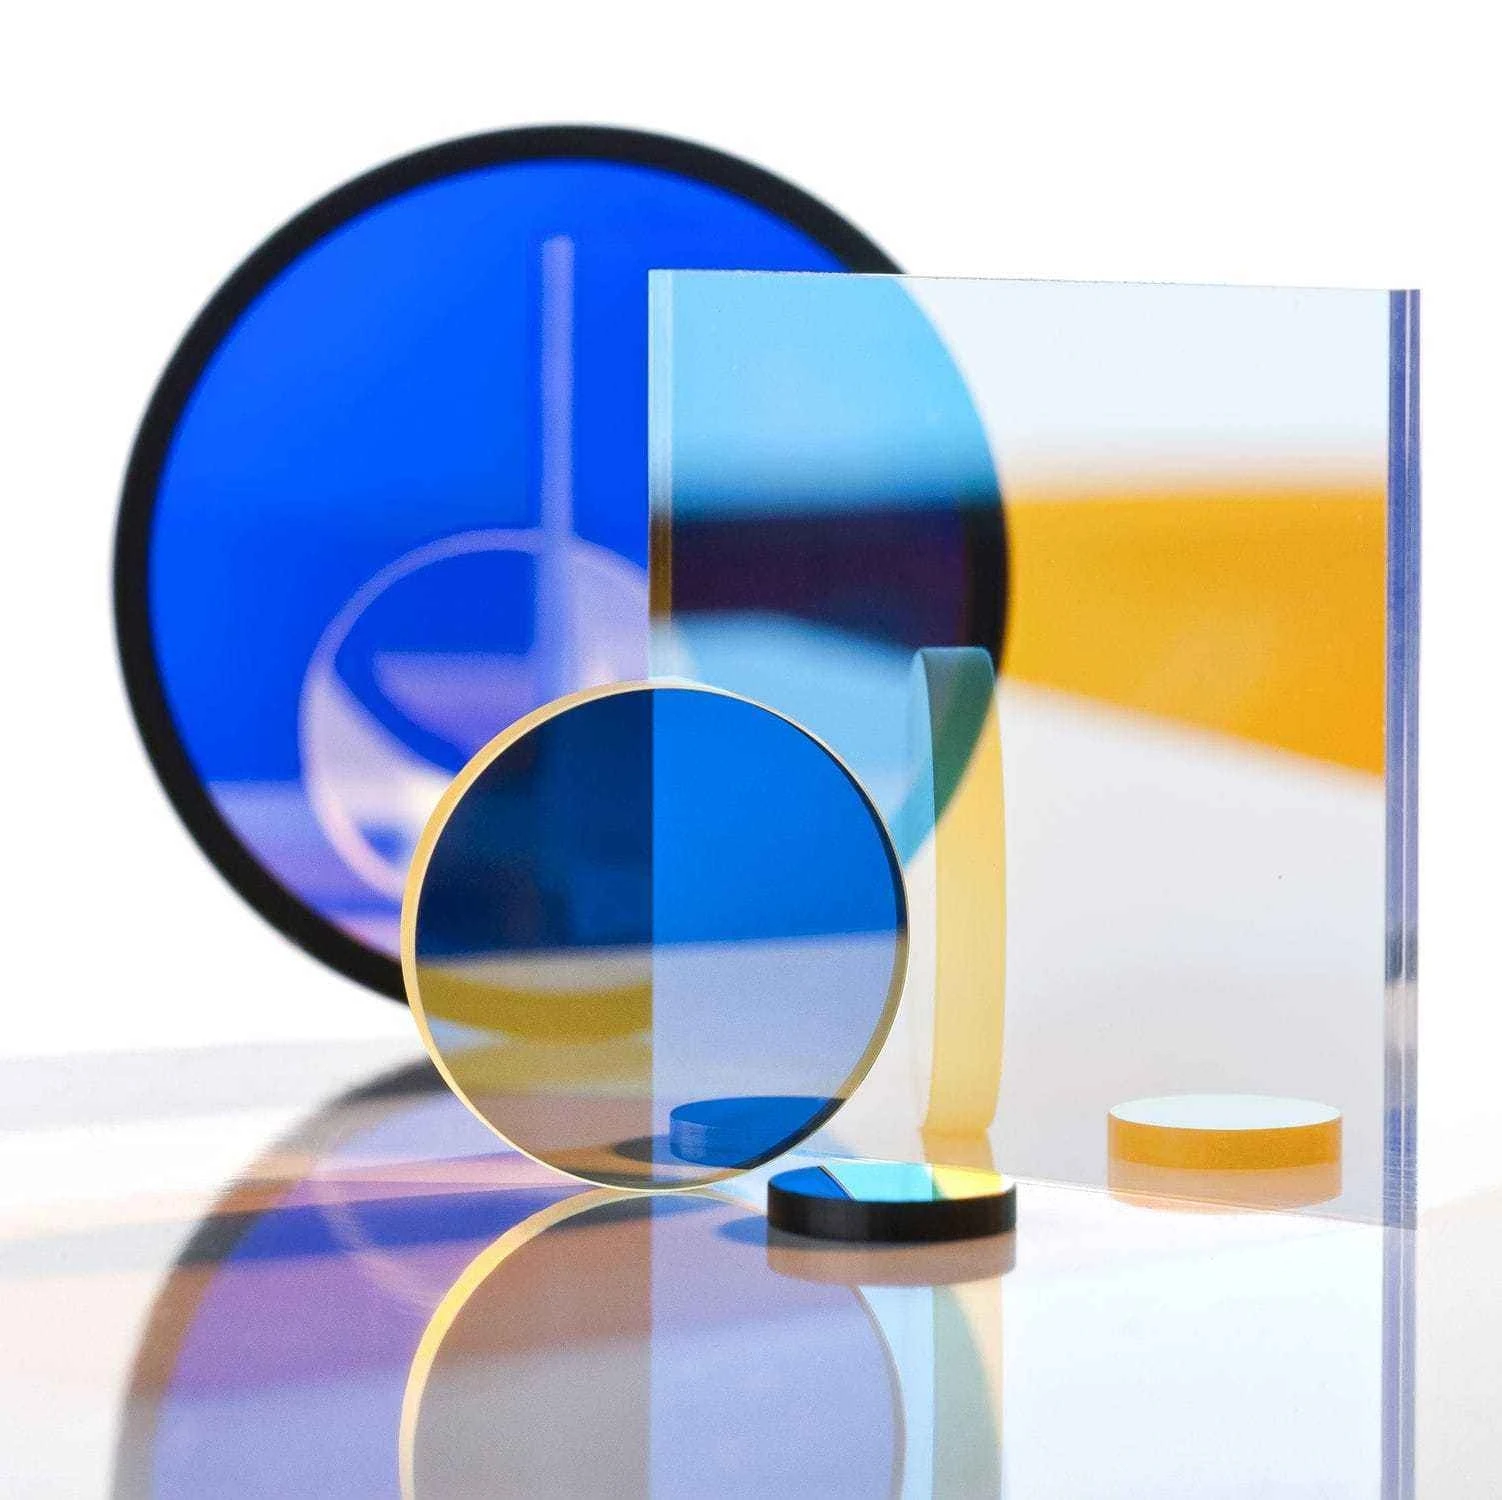 400-1100nm dichroic mirror glass optical colored windows plate dichroic filter